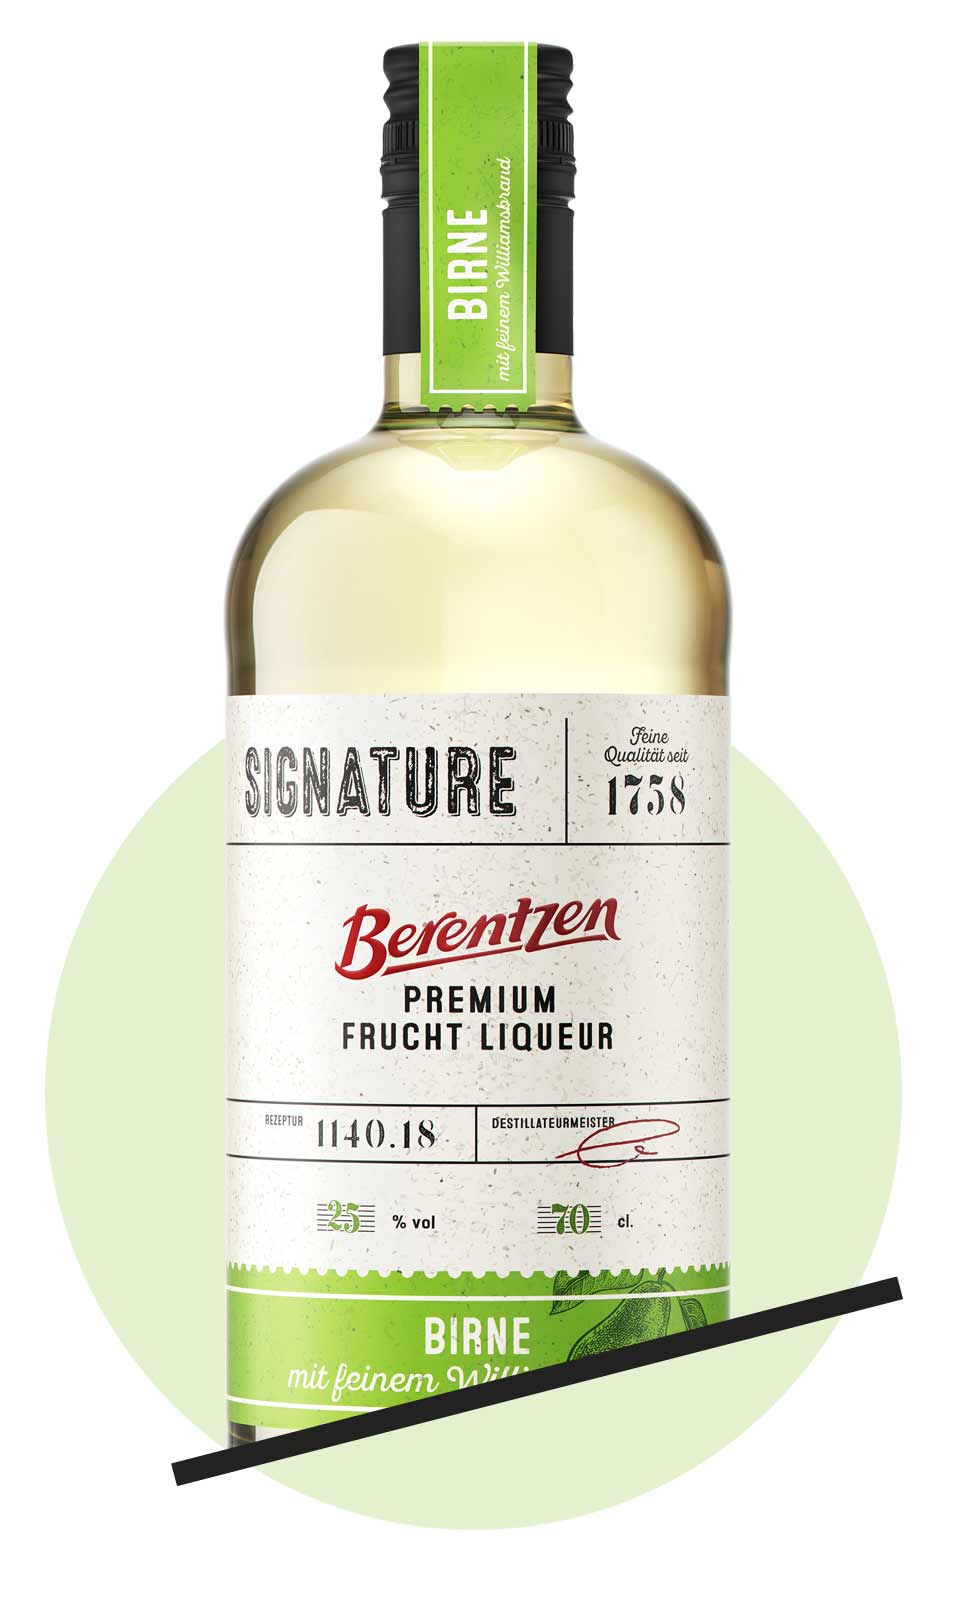 Berentzen Signature Premium Fruchtliqueur, Birne | Verkostungsrunde Spirituosen April 2019 | Mixology Magazin für Barkultur